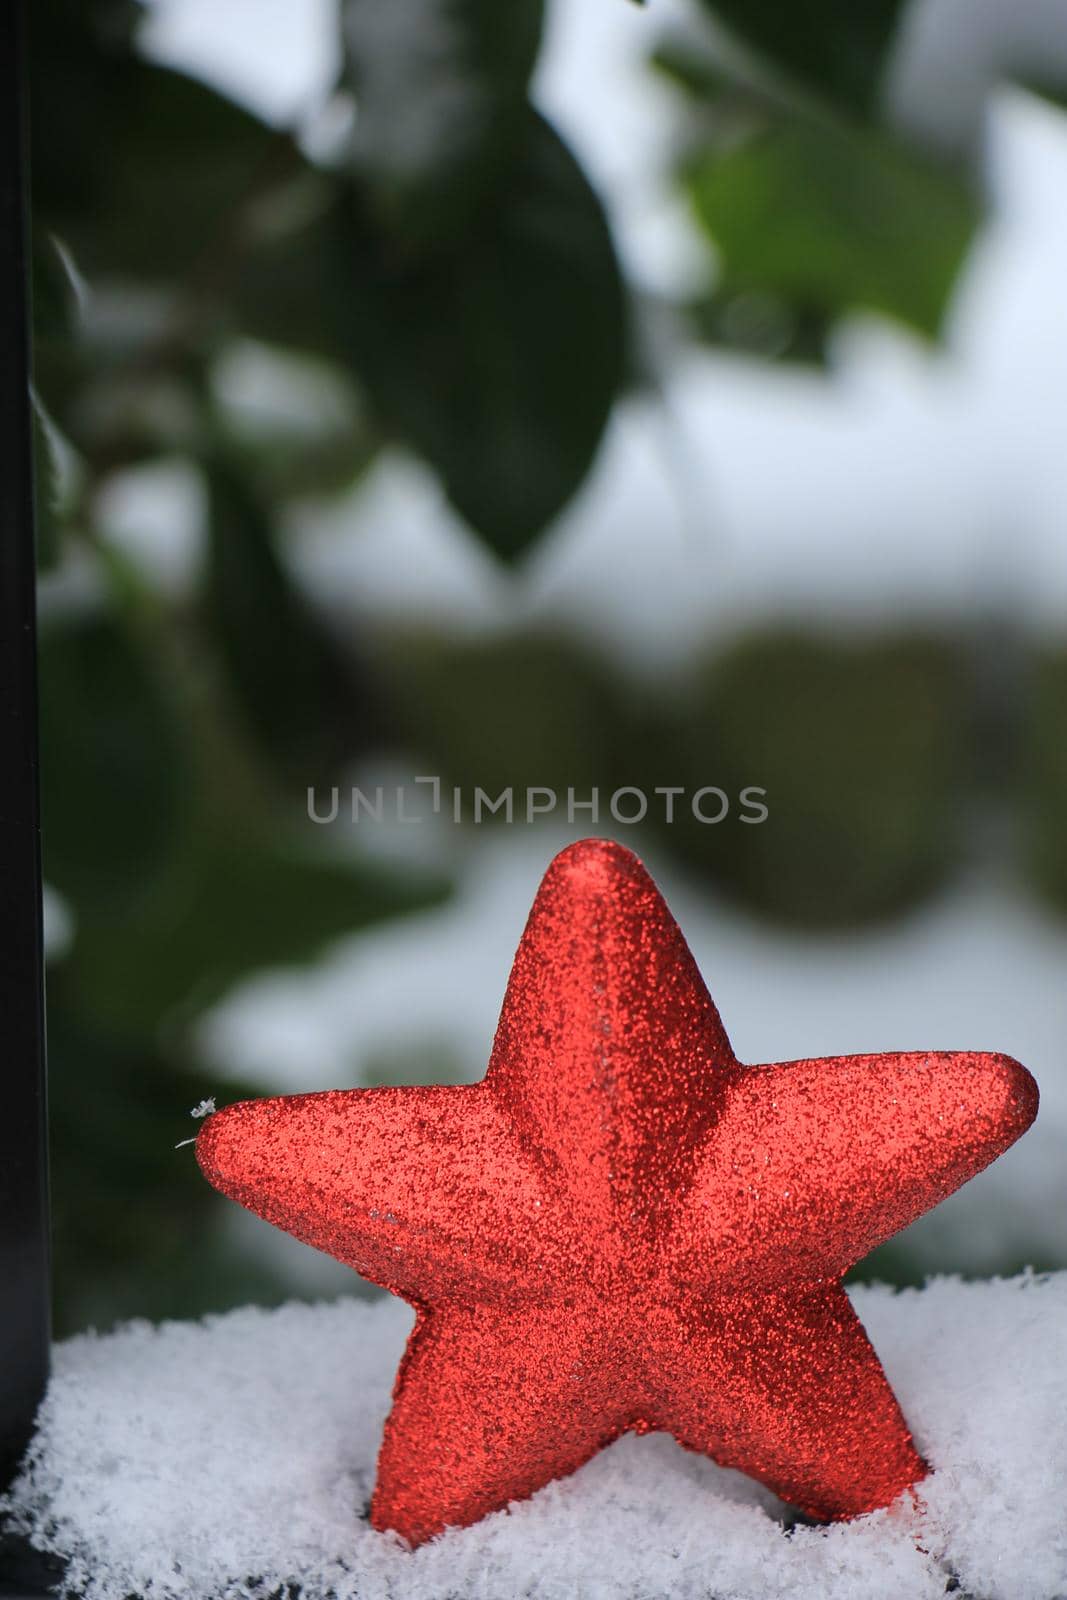 Red star ornament in fresh fallen snow